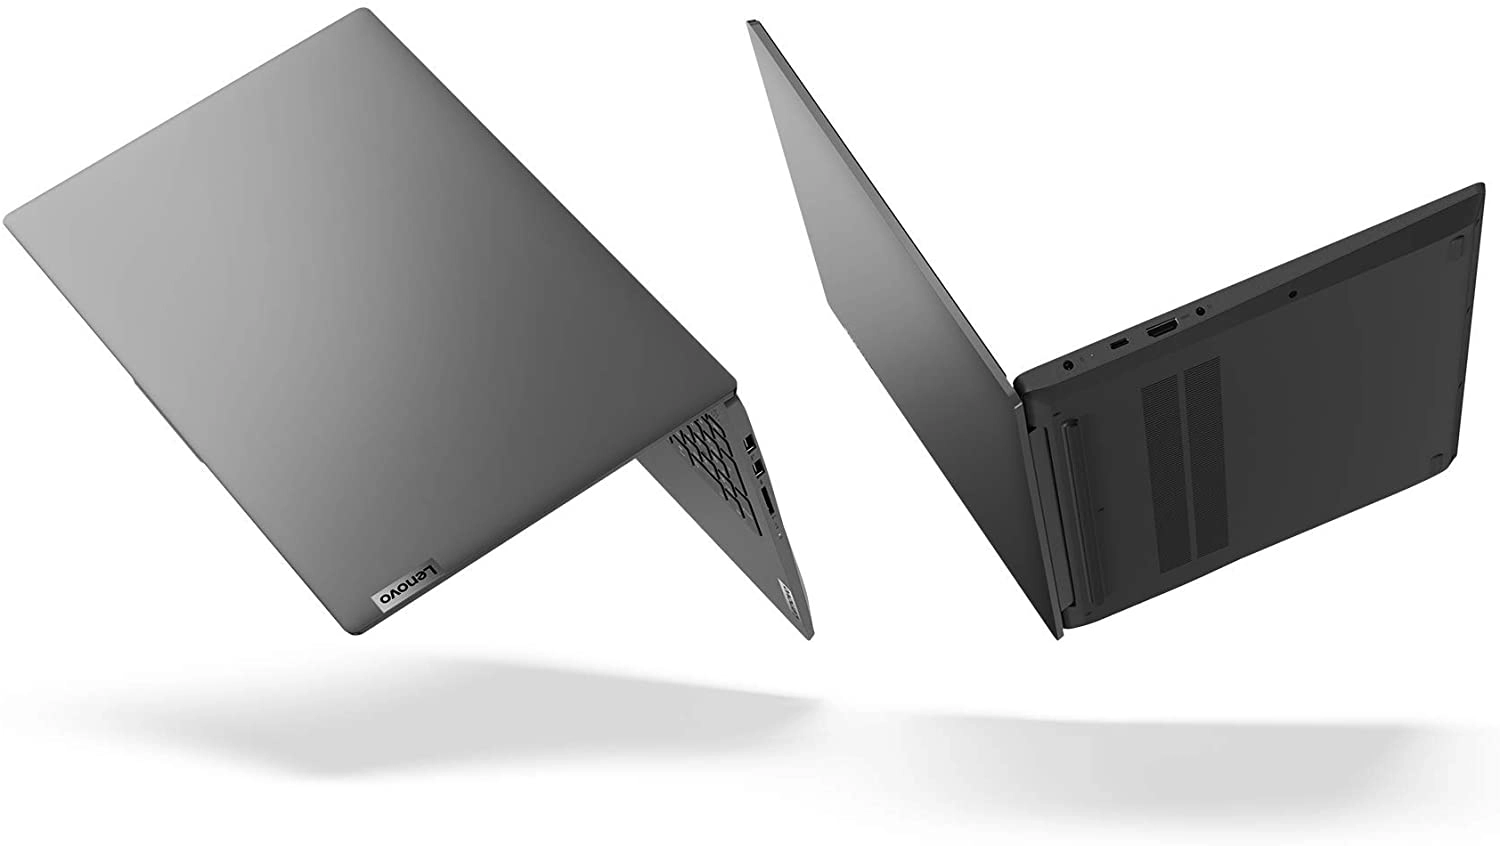 Lenovo IdeaPad 5 15ITL05 laptop image